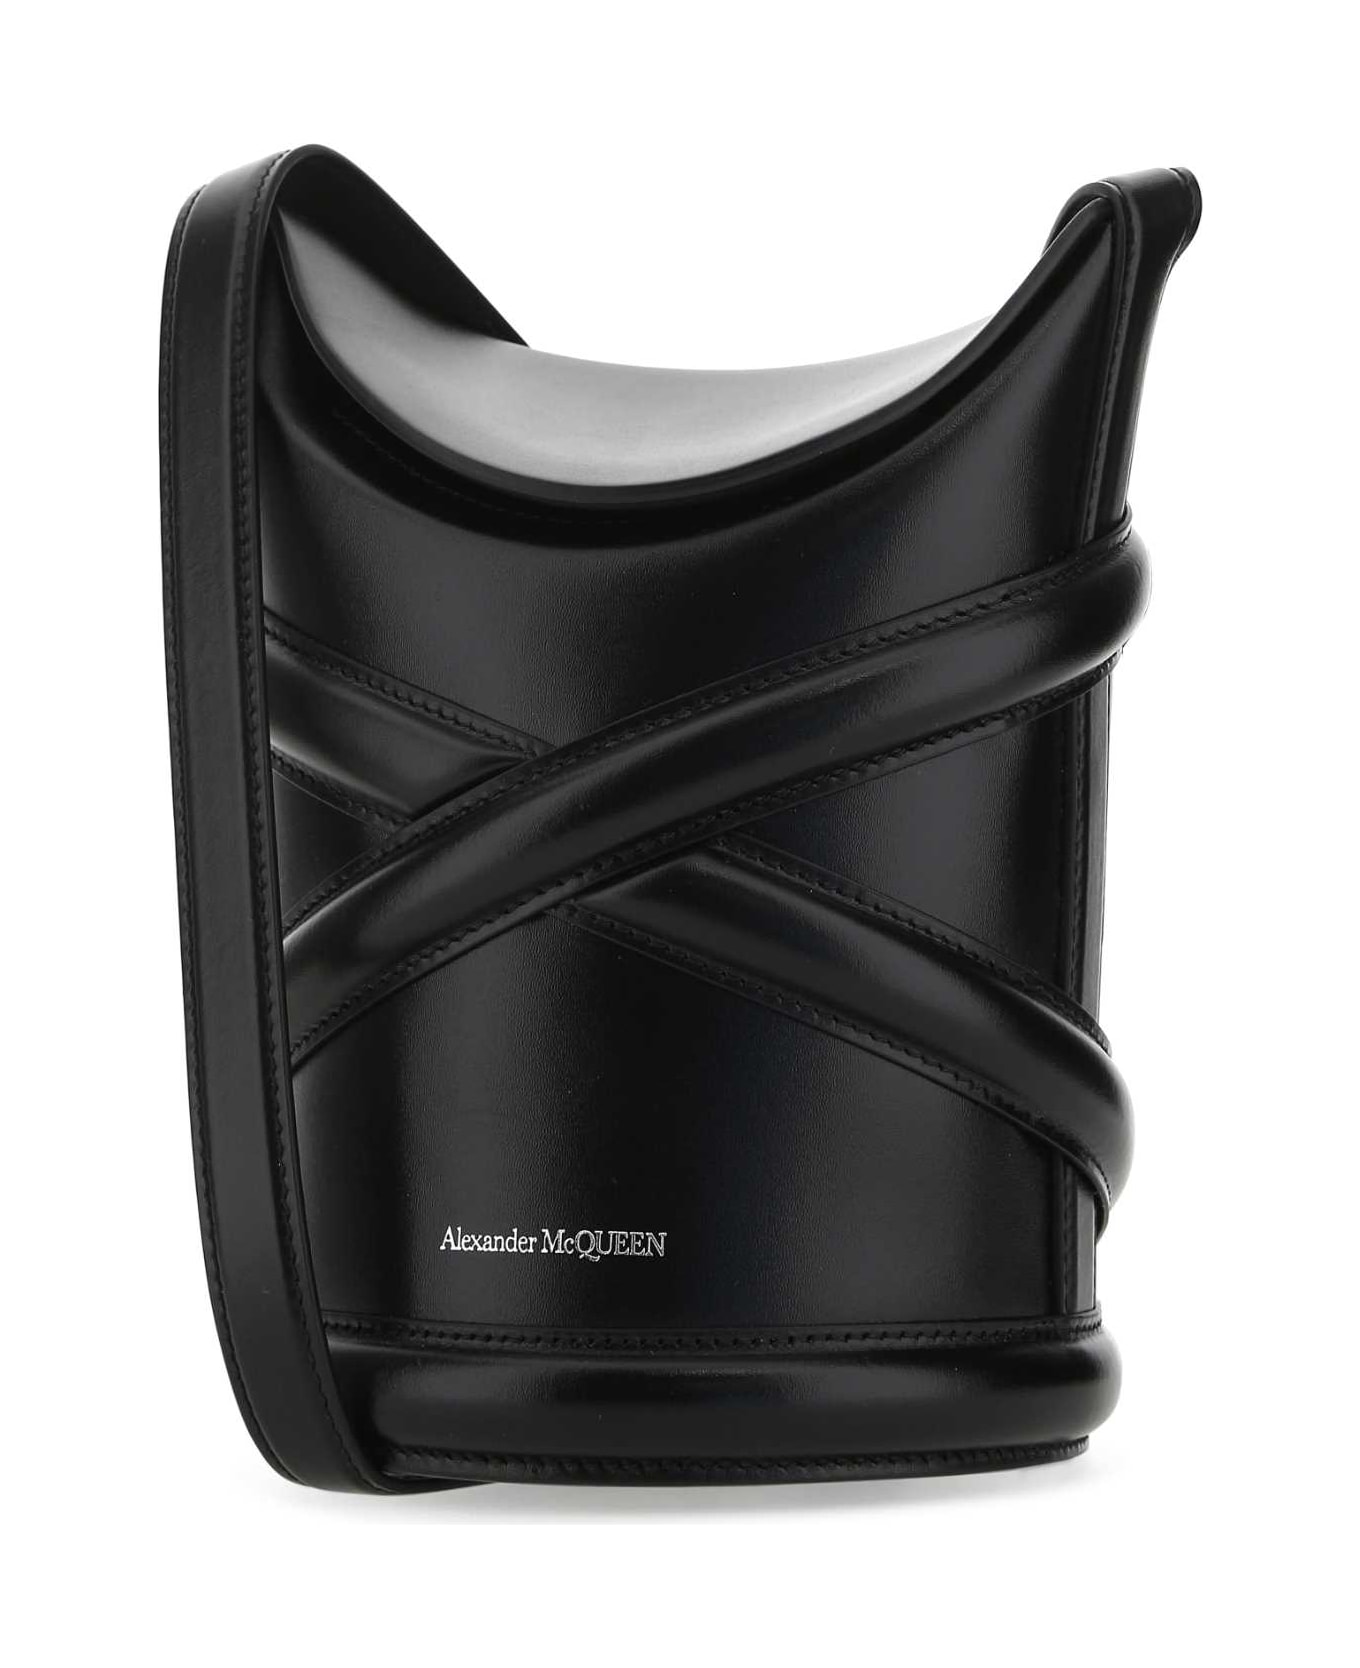 Alexander McQueen Black Leather The Curve Bucket Bag - BLACK